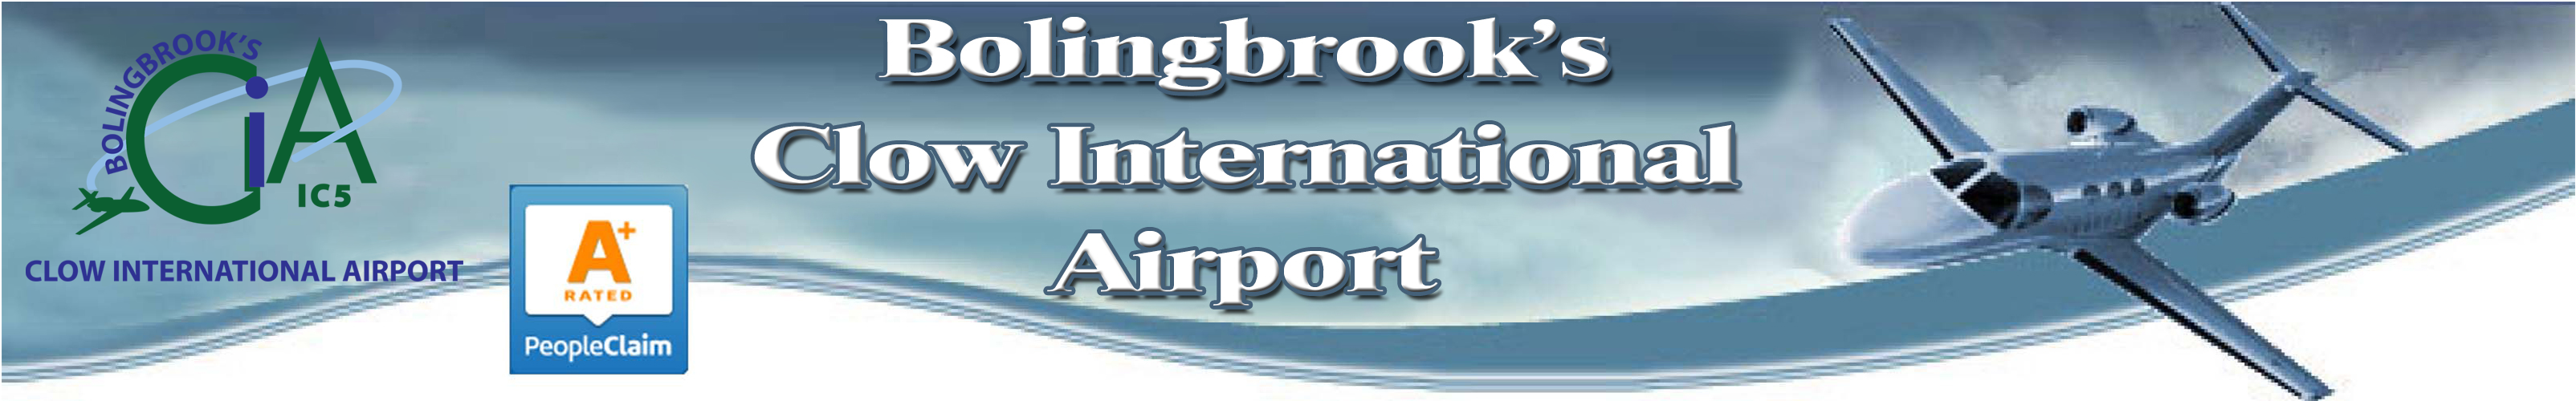 Clow International Airport